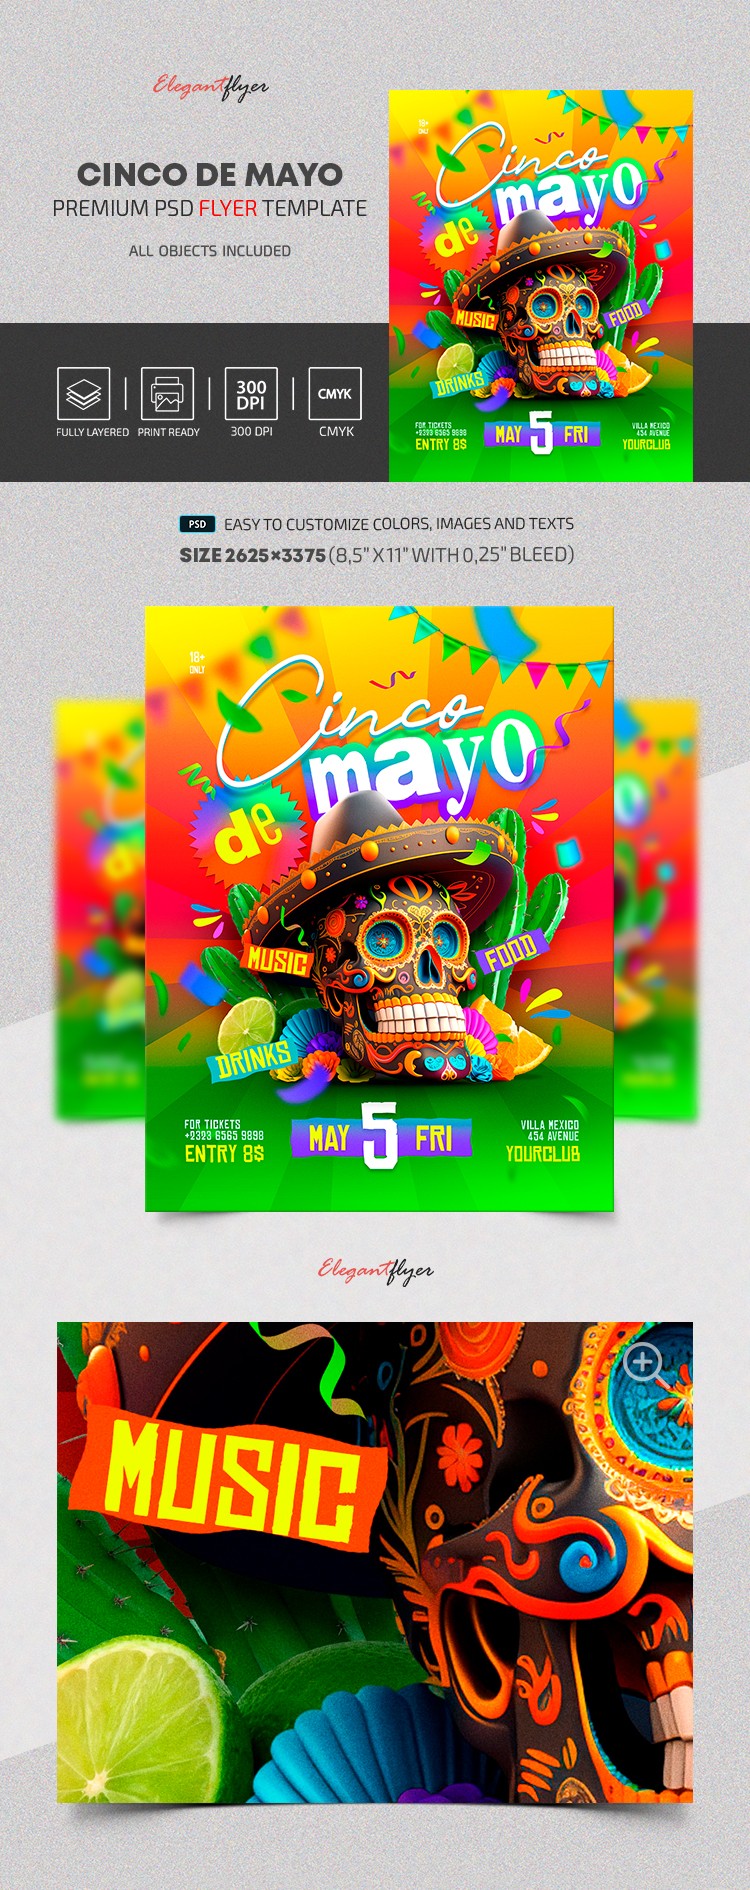 Cinco de Mayo - Premium PSD Flyer Template by ElegantFlyer